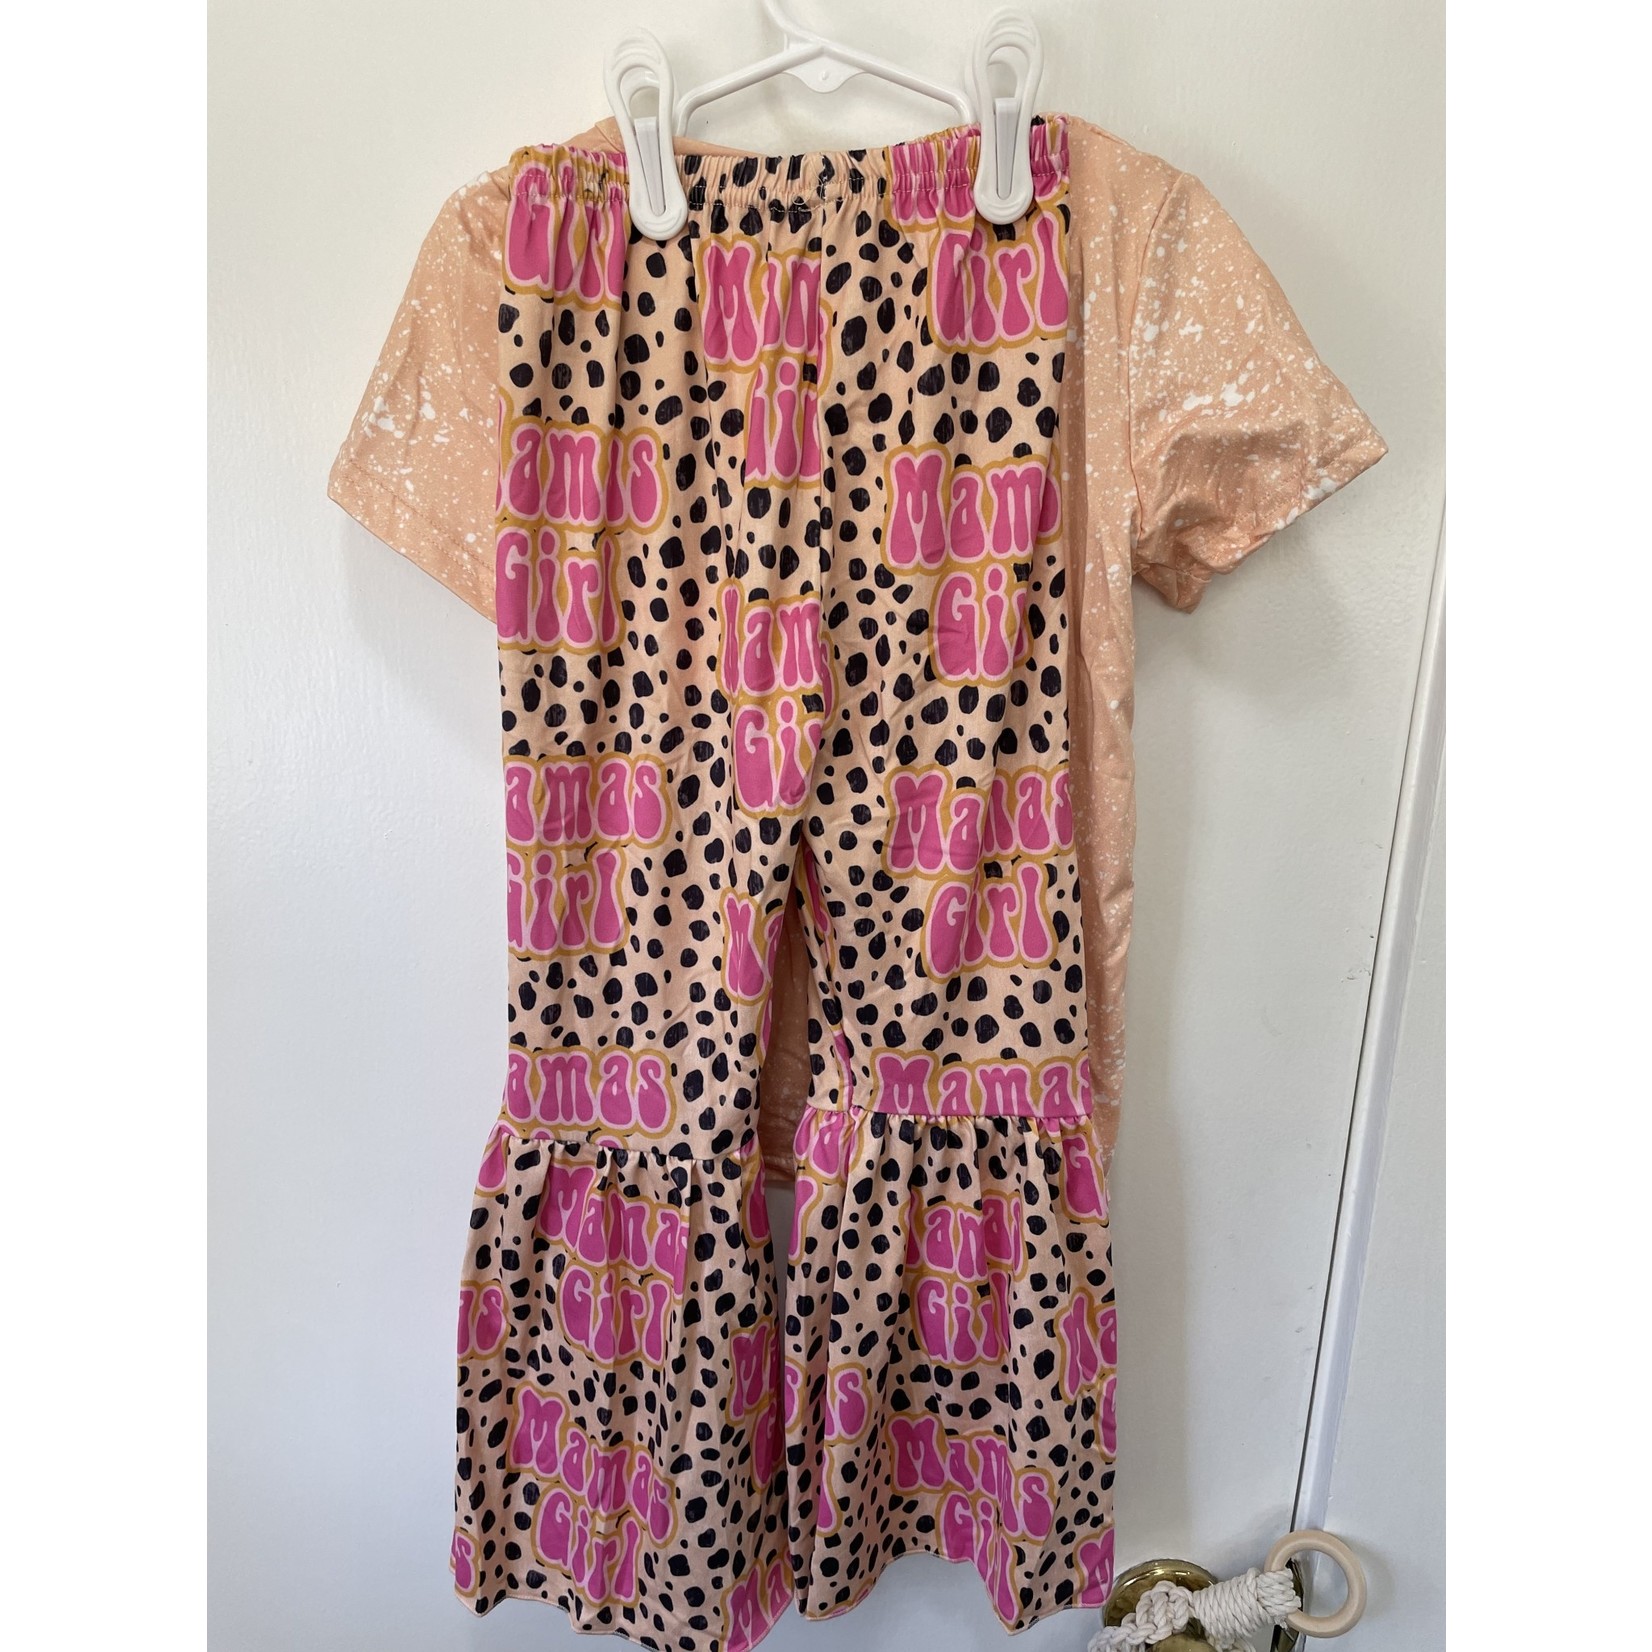 Yawoo Garments Mamas girl w/ leopard pants set